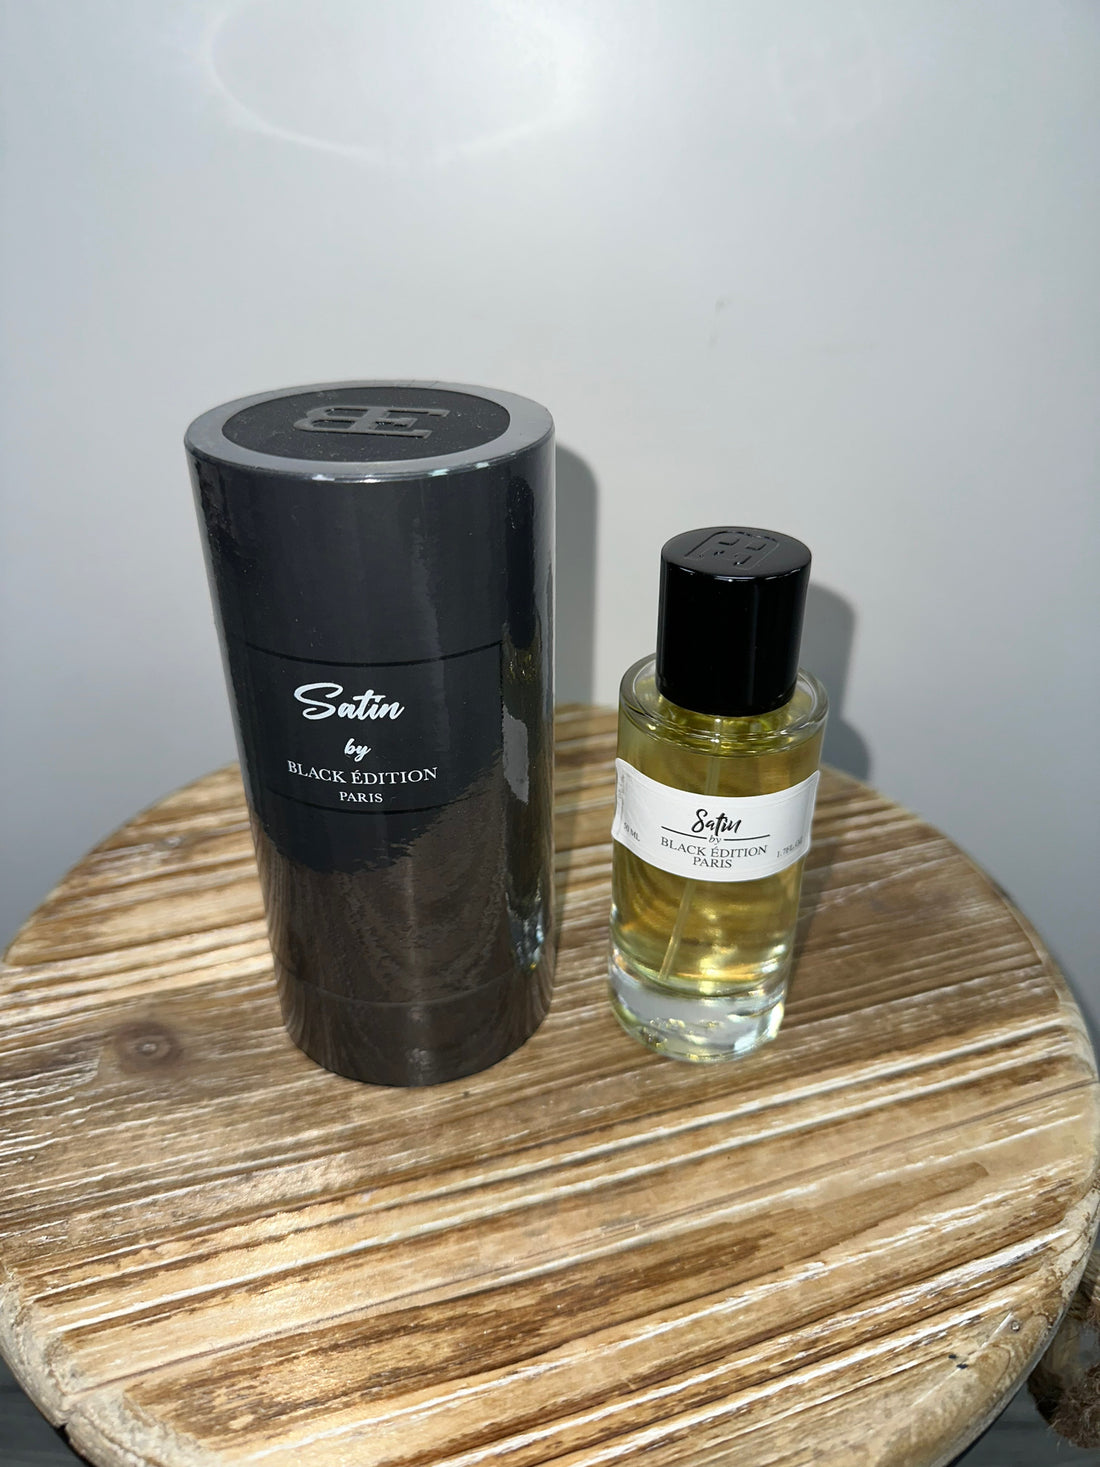 Black Edition Paris - Parfum SATIN